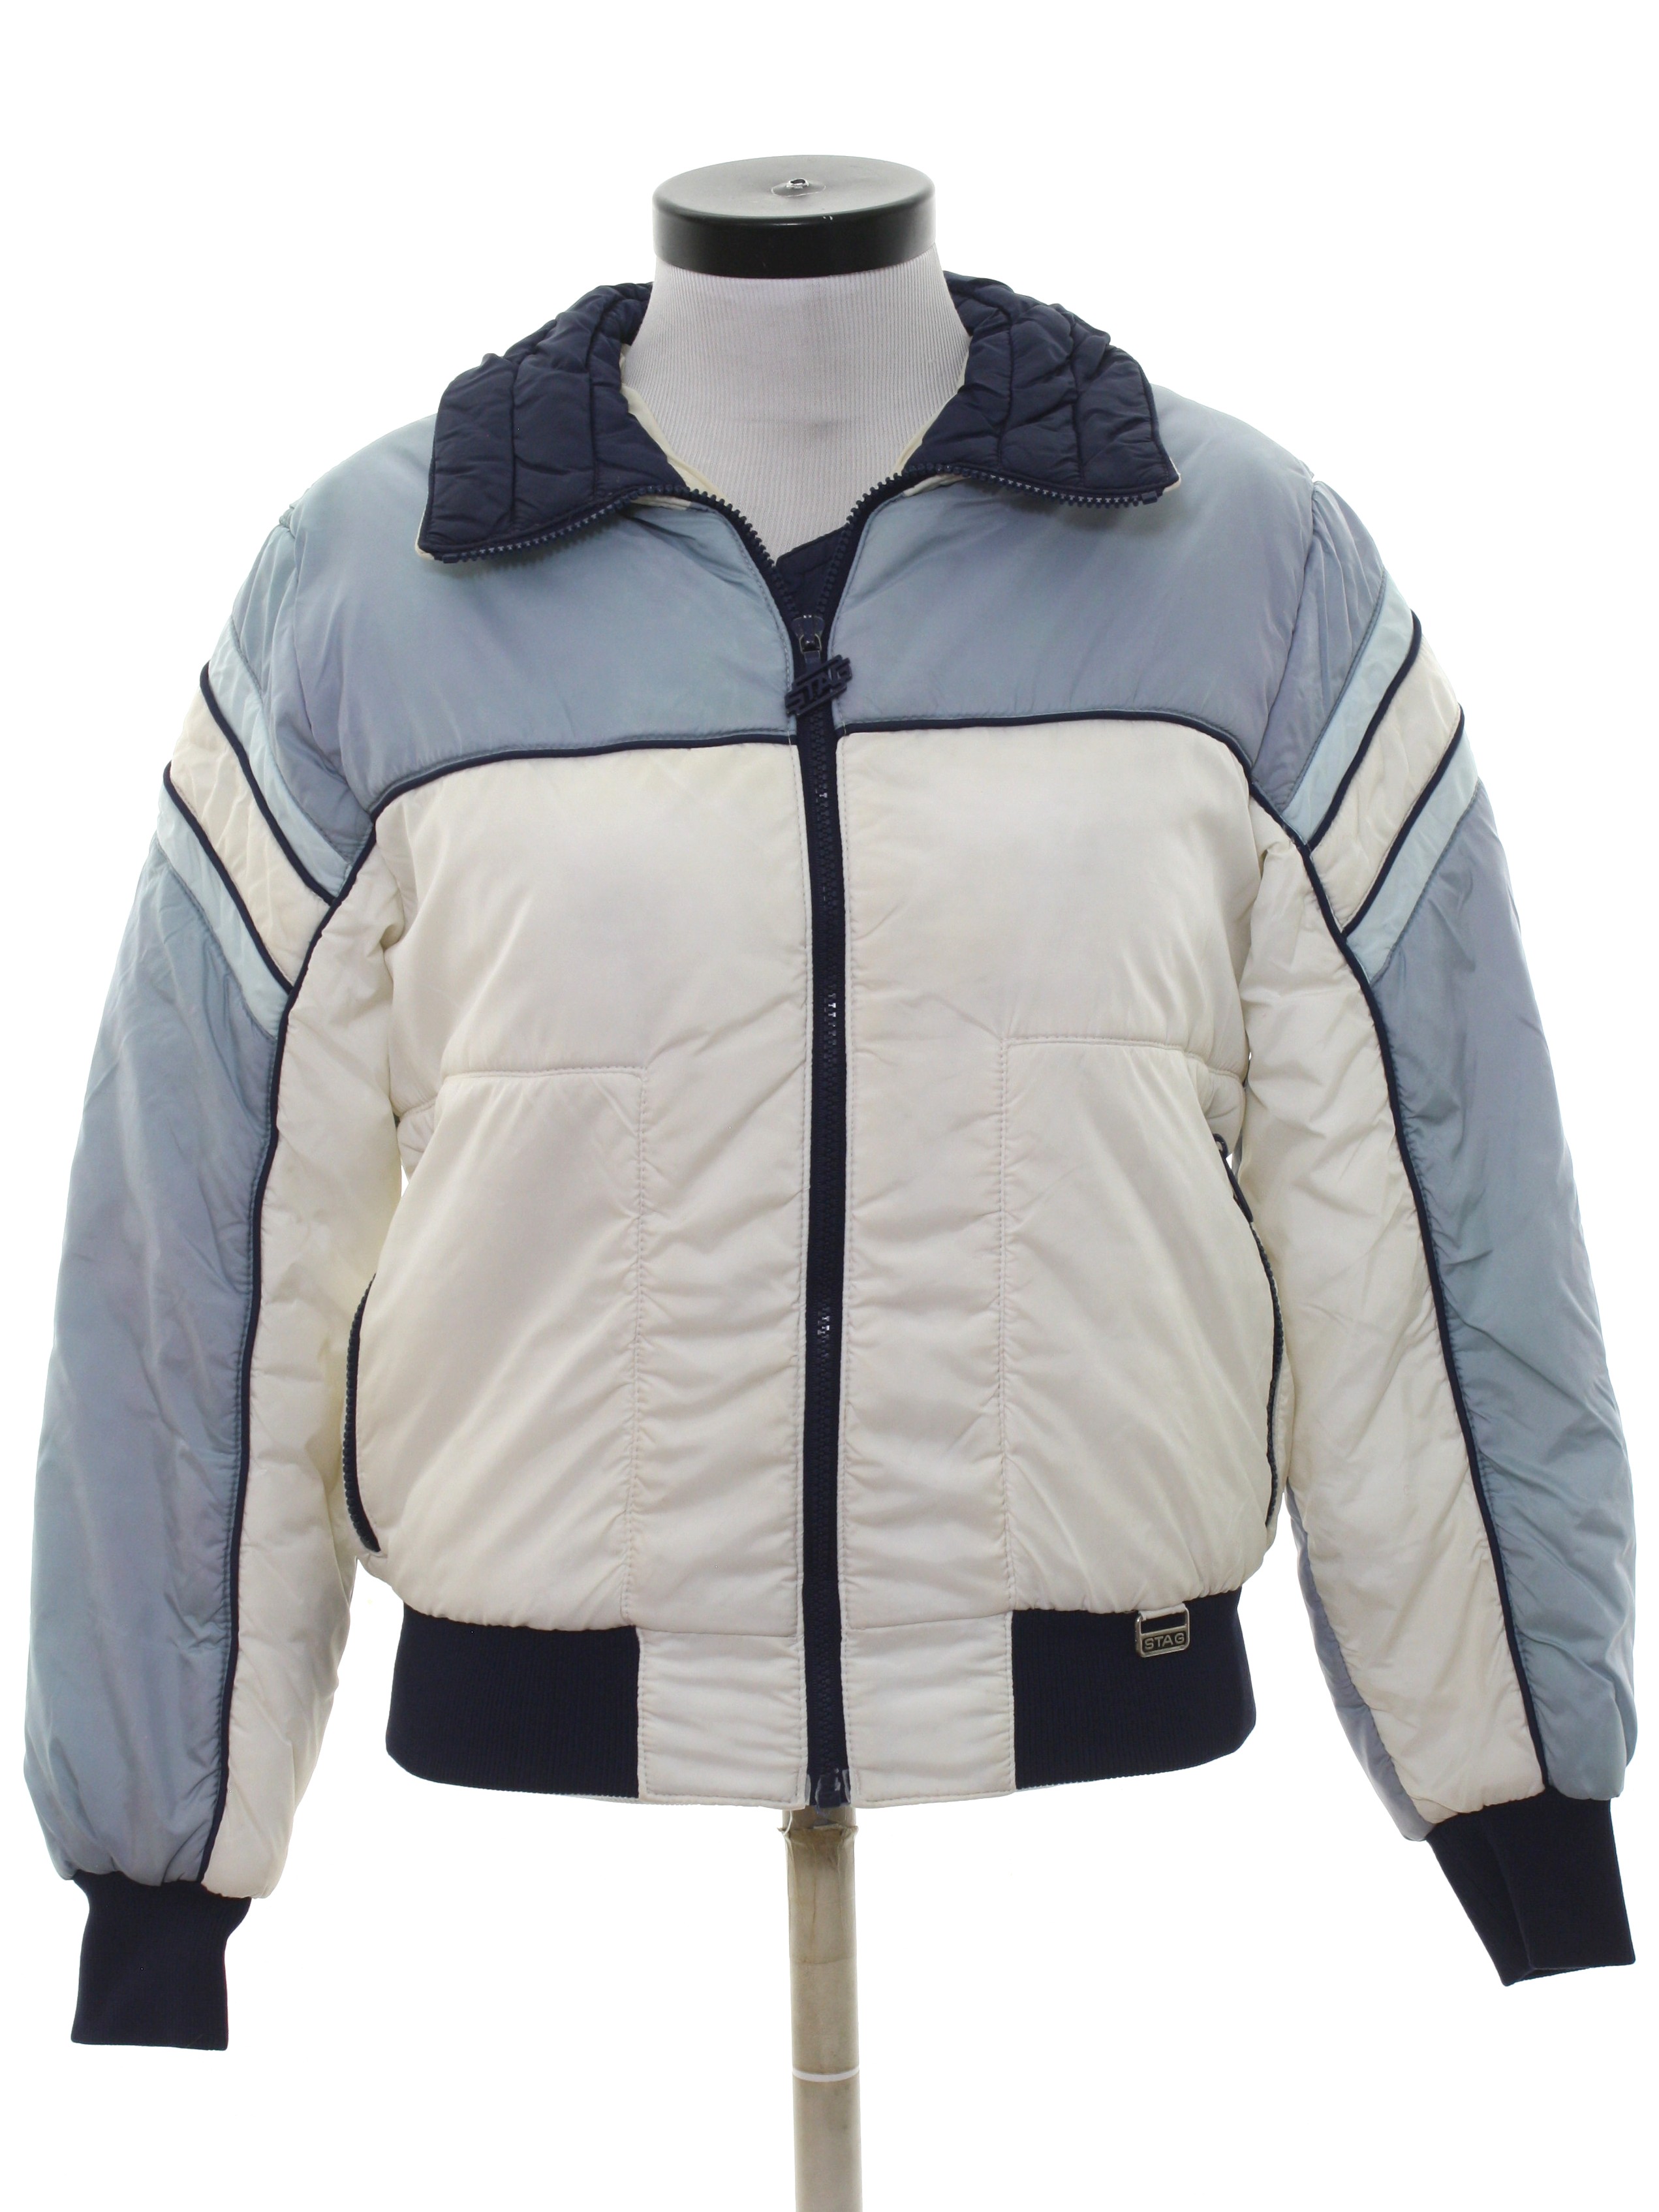 Retro 1980's Jacket (White Stag) : 80s -White Stag- Womens white and ...